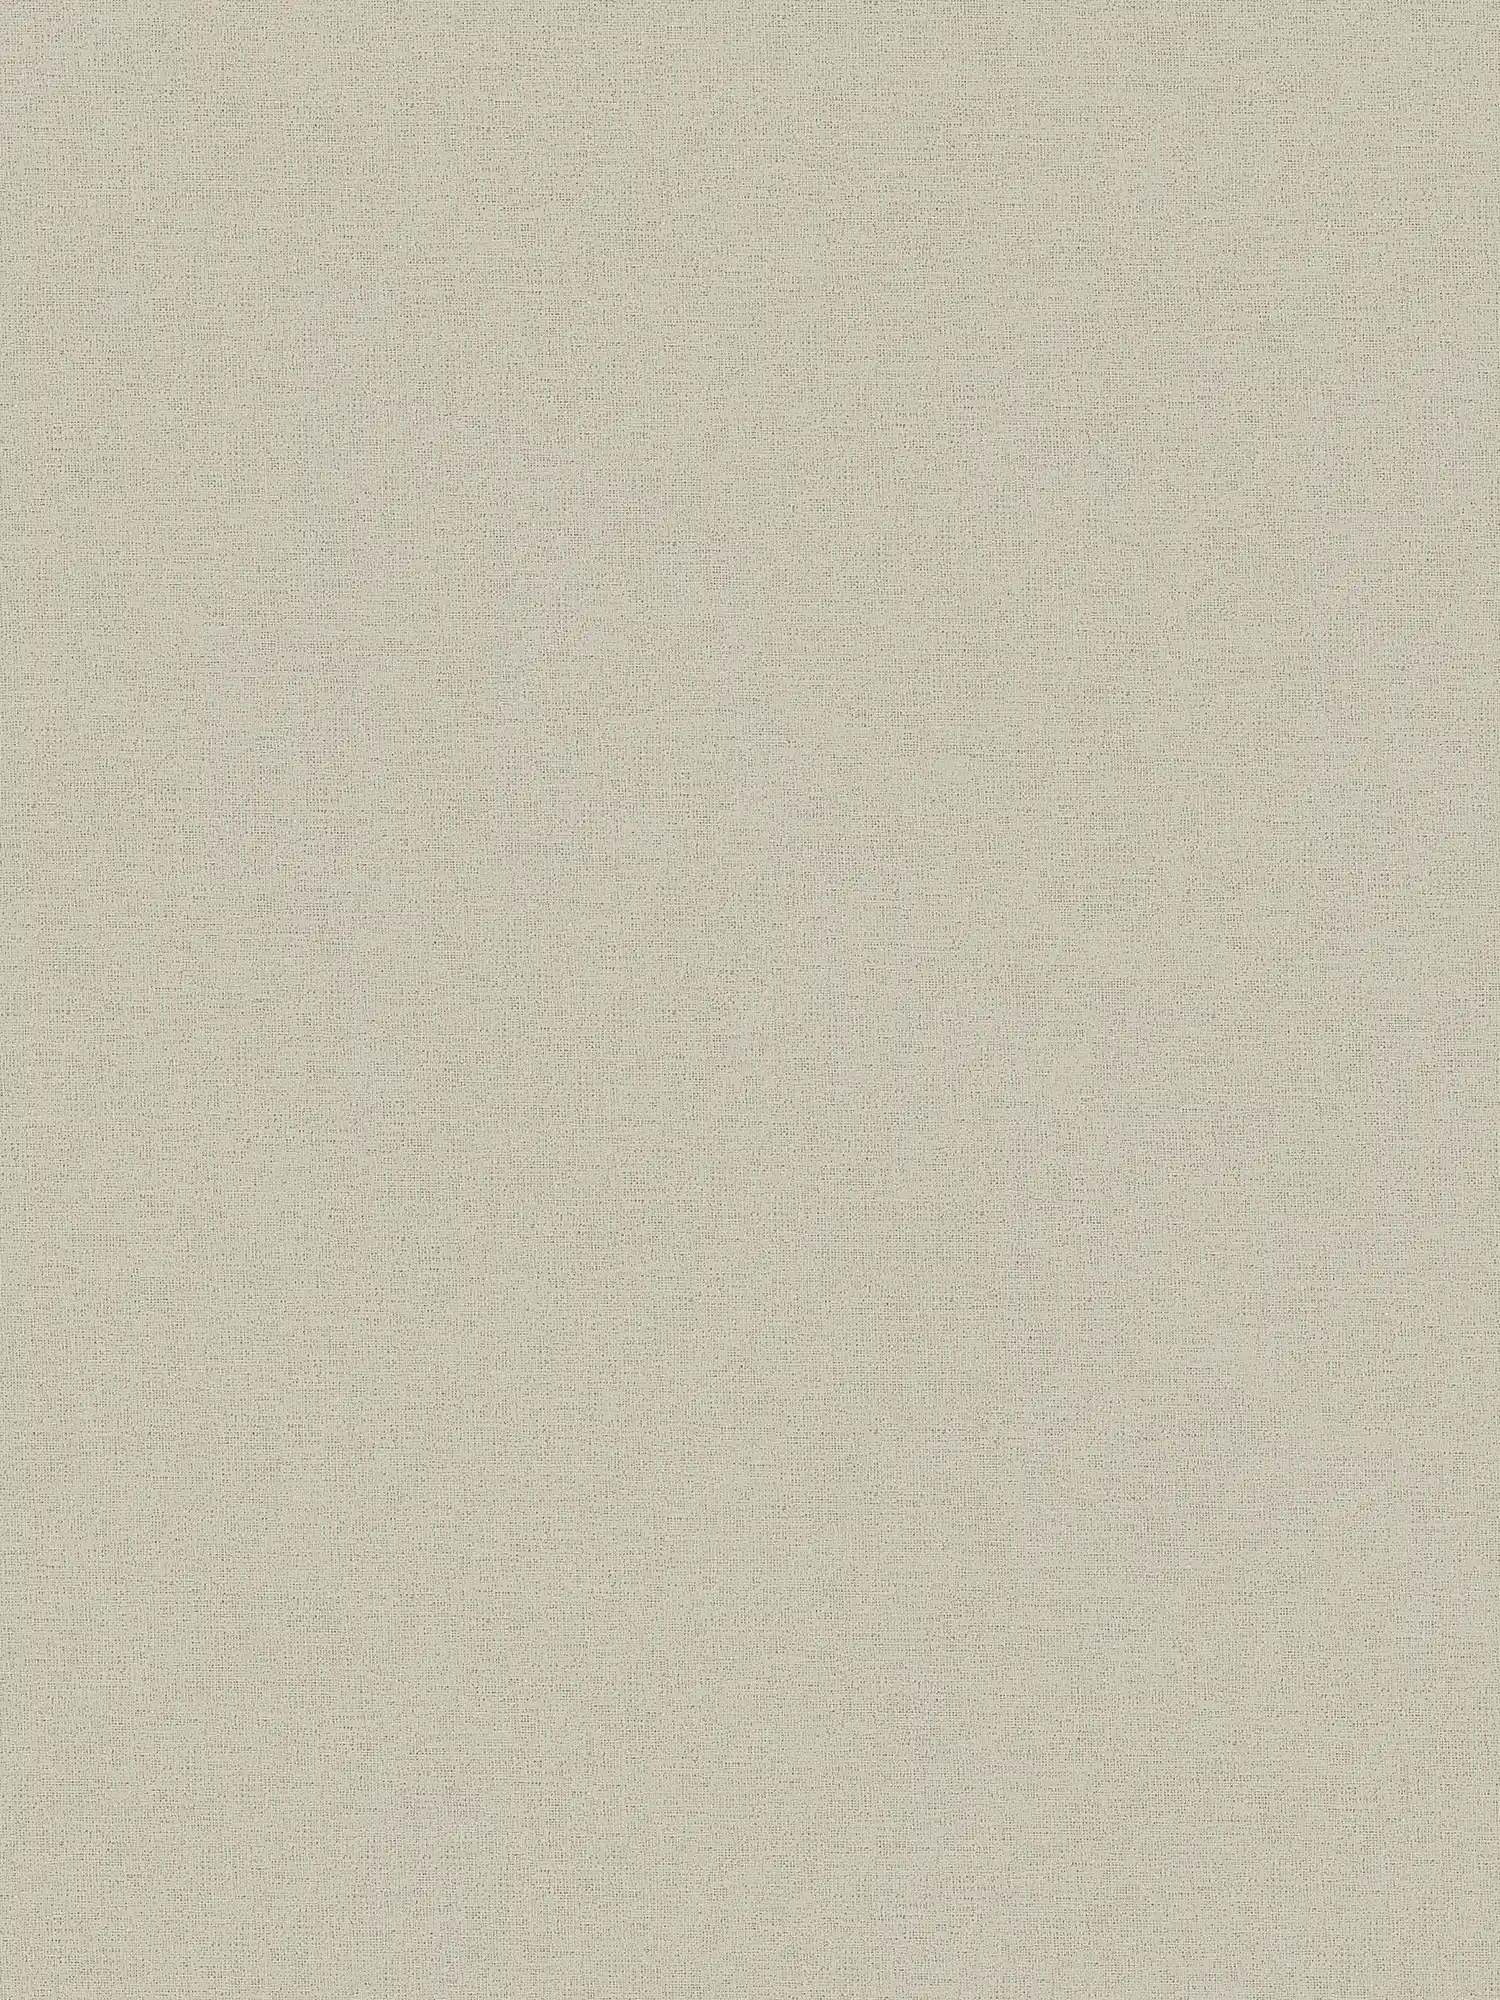 Linen look wallpaper beige with mottled textile texture
